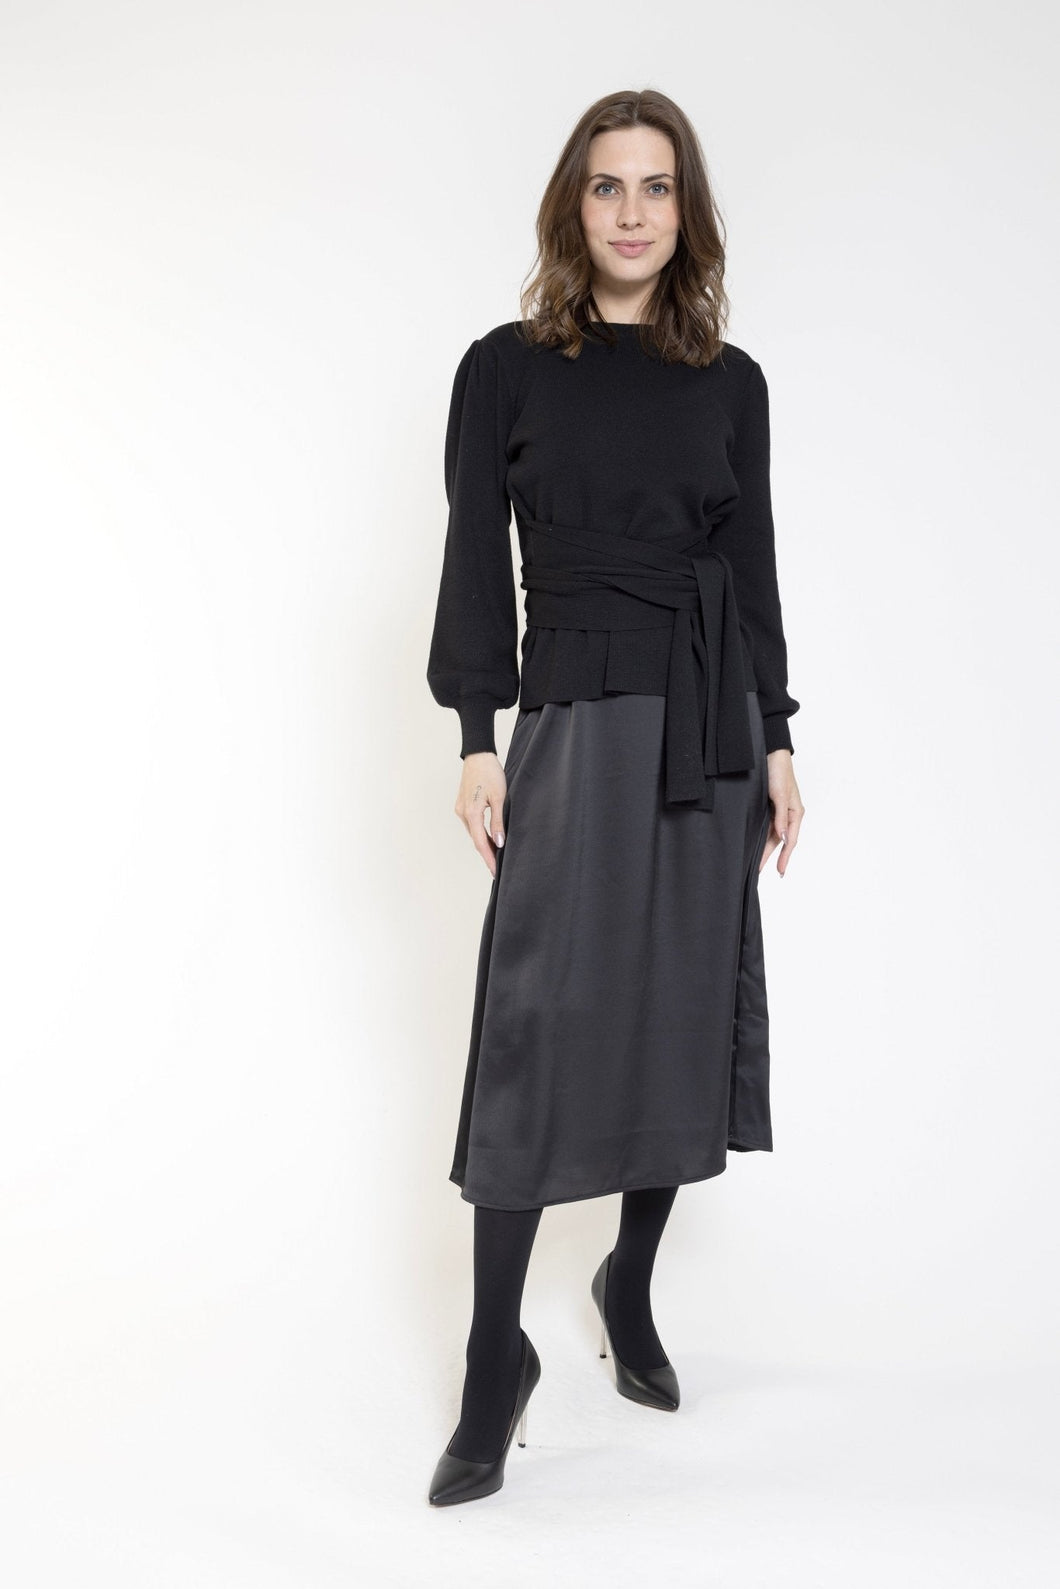 LU SATIN SLIP DRESS WITH BLACK KNITTED TIE - Dresses